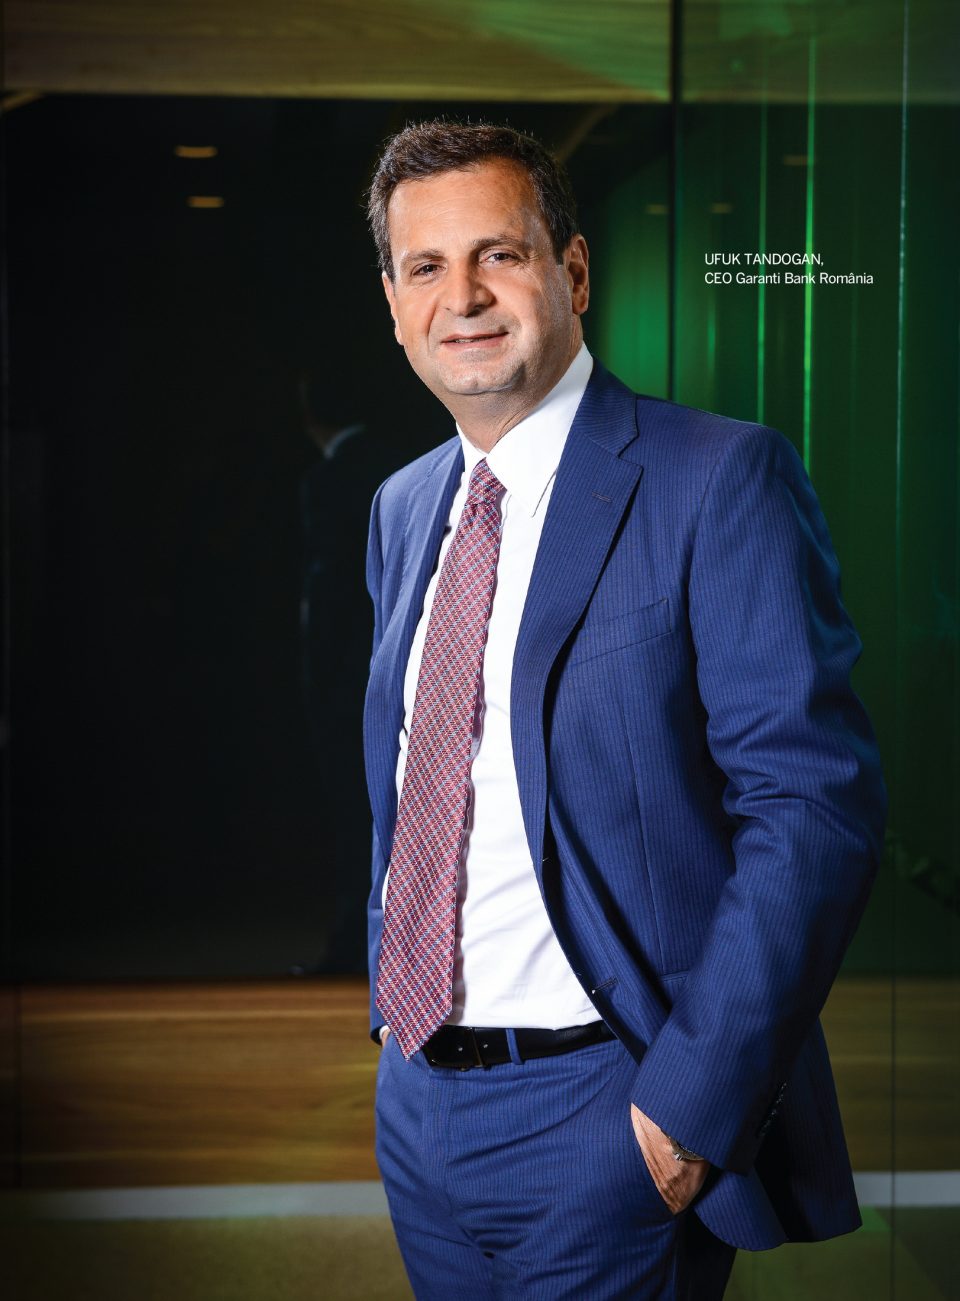 Ufuk Tandoğan, CEO Garanti Bank Romania